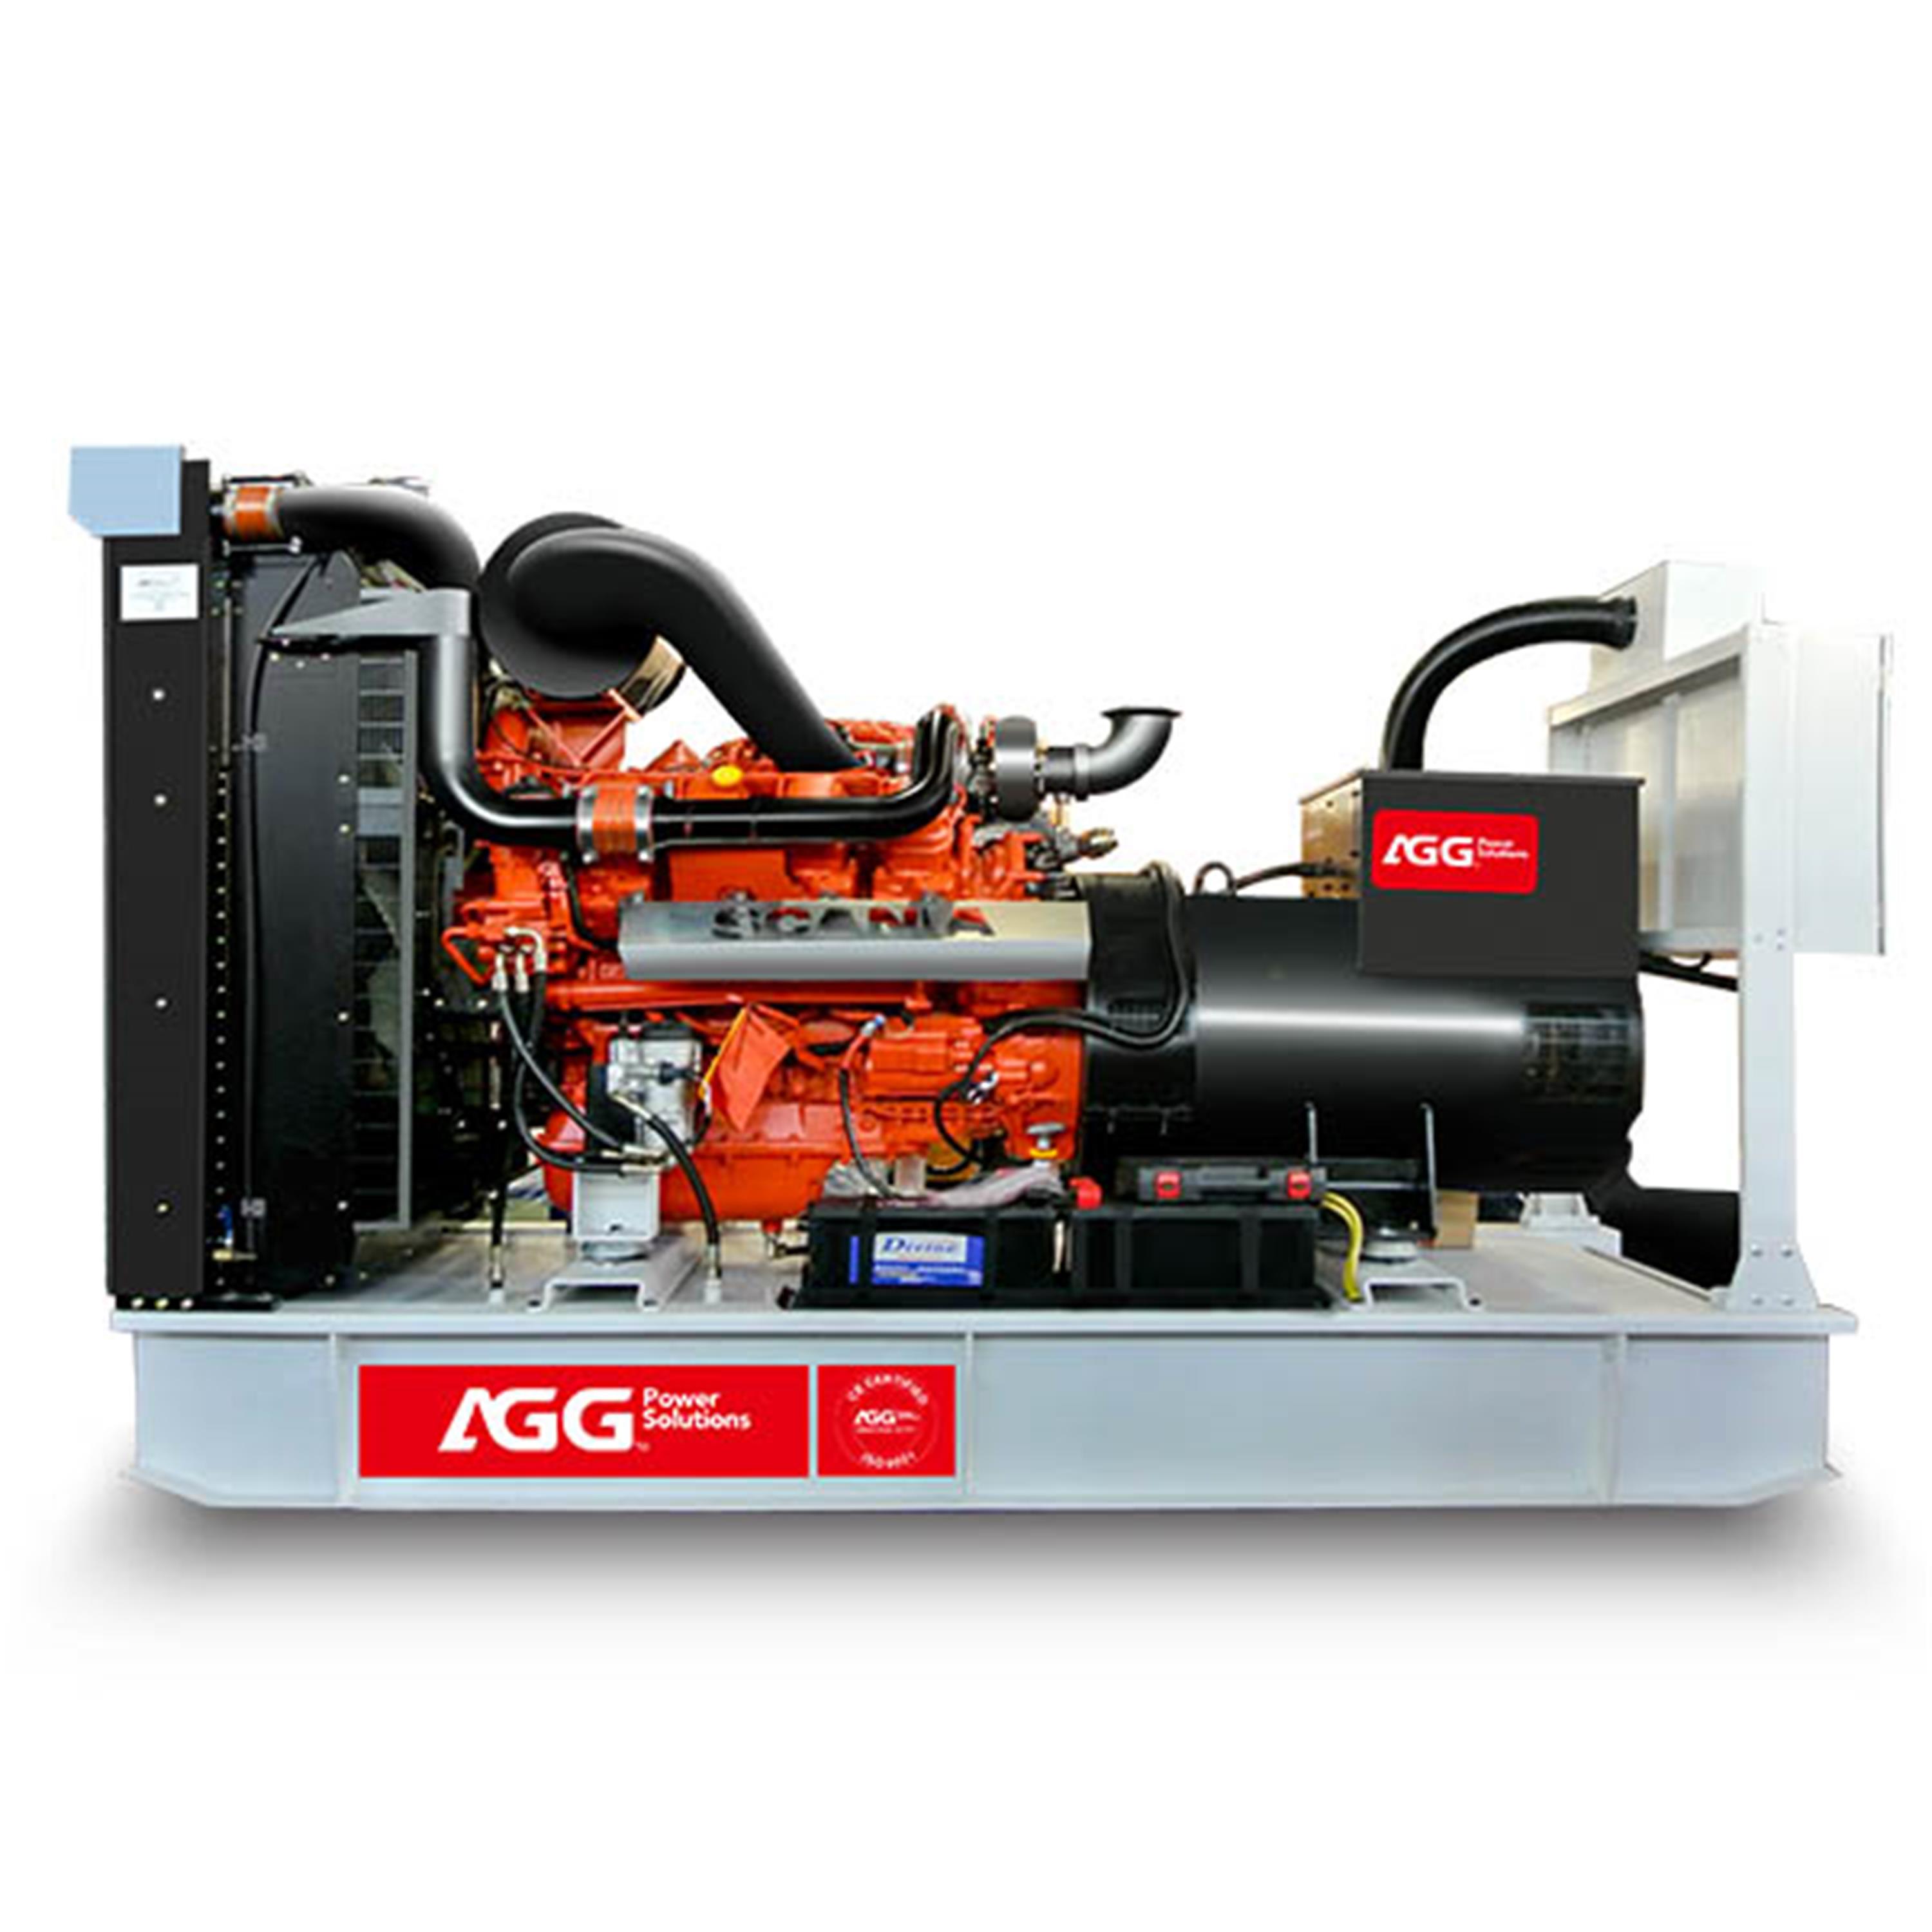 S660E5-50HZ - AGG Power Technology (UK) CO., LTD.